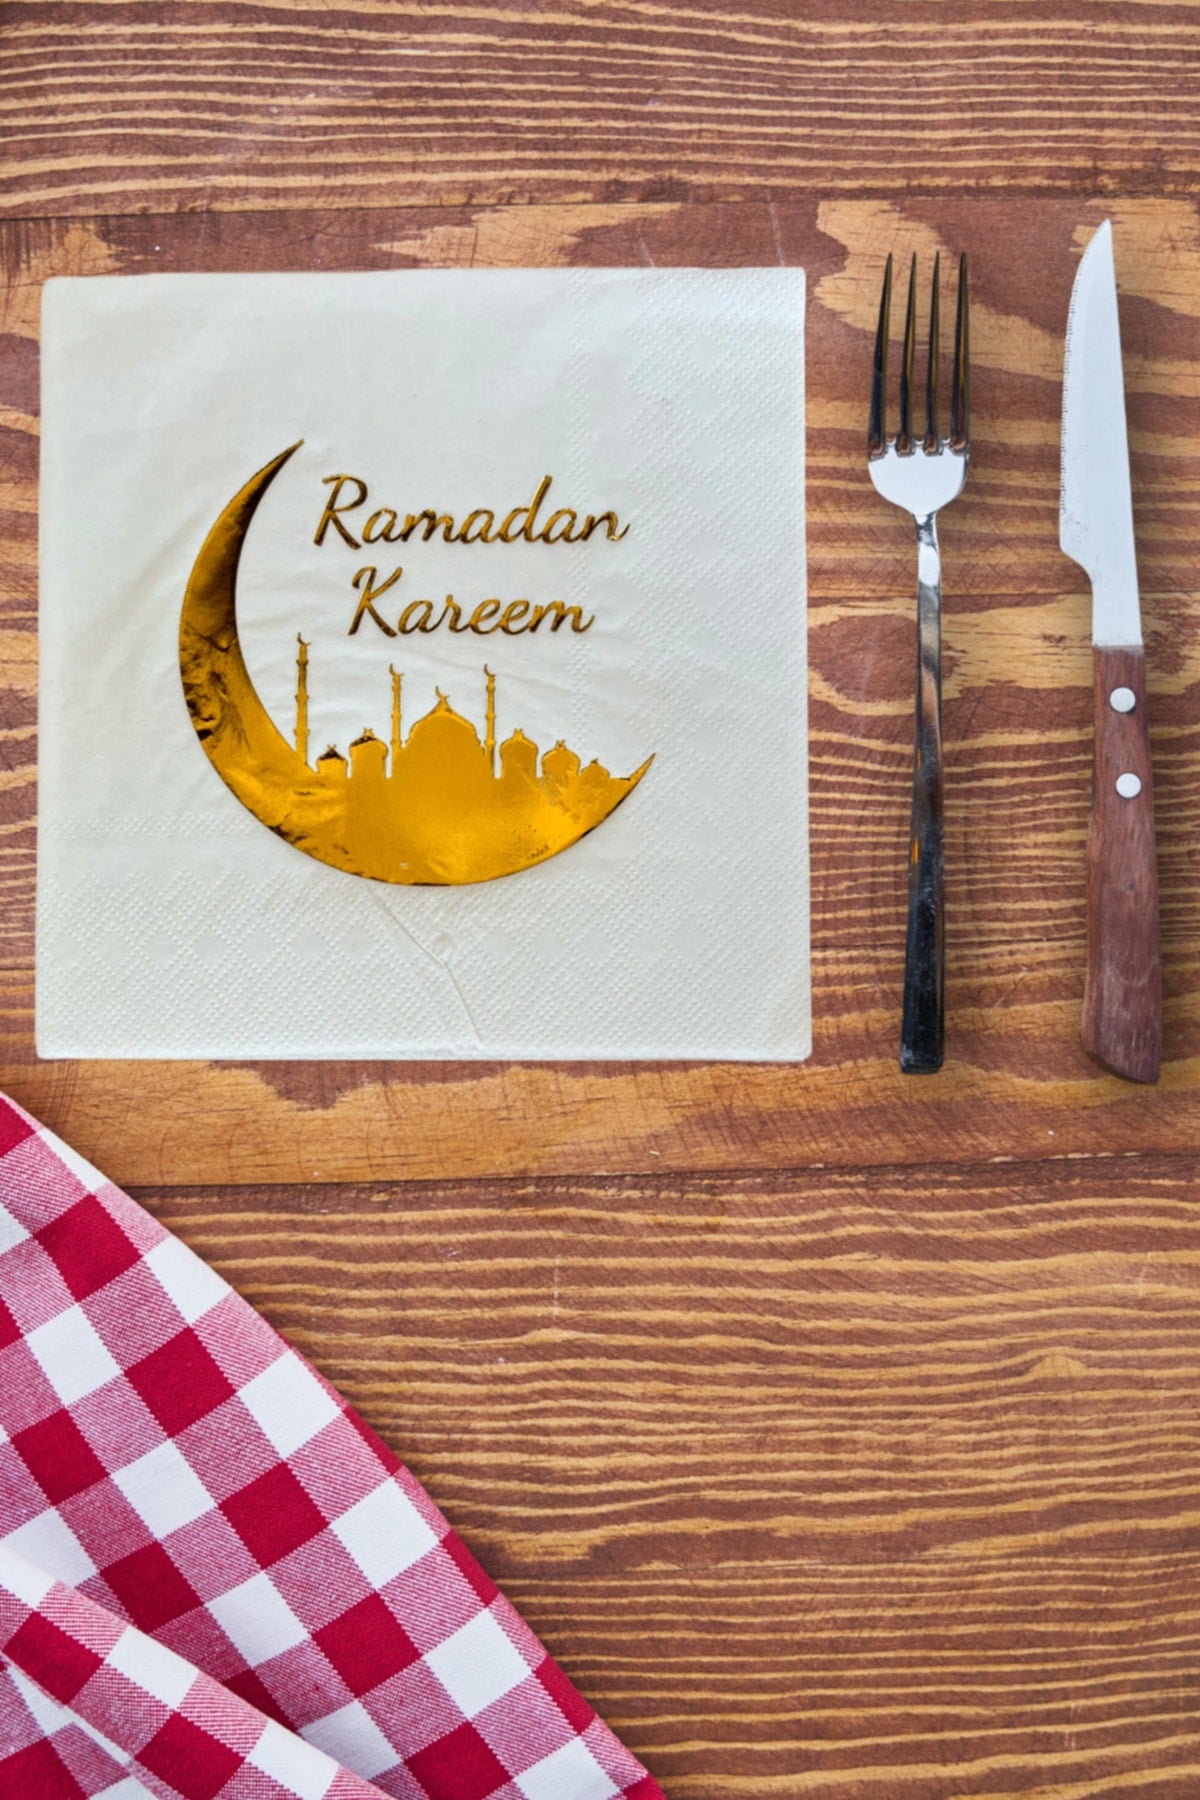 Huzur Party Store Ramadan Kareem Gold Gilded Napkin 16 Pcs 16x16 Cm Gold Leaf Ramadan Bayram Themed Religious Ornament HZRRAMAZANPECETE